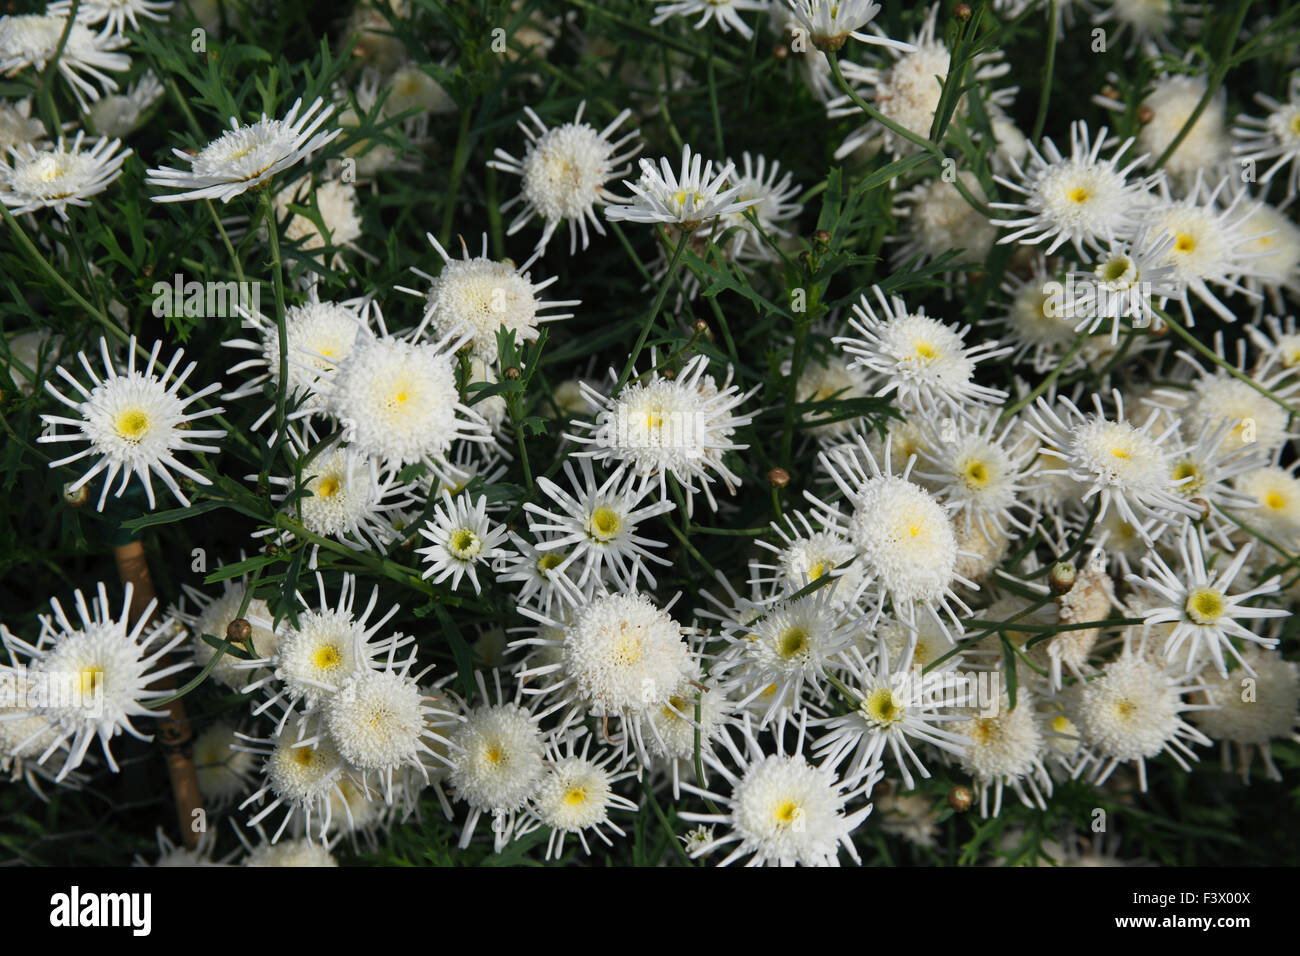 Agryanthemum 'Starlight' plants in flower Stock Photo